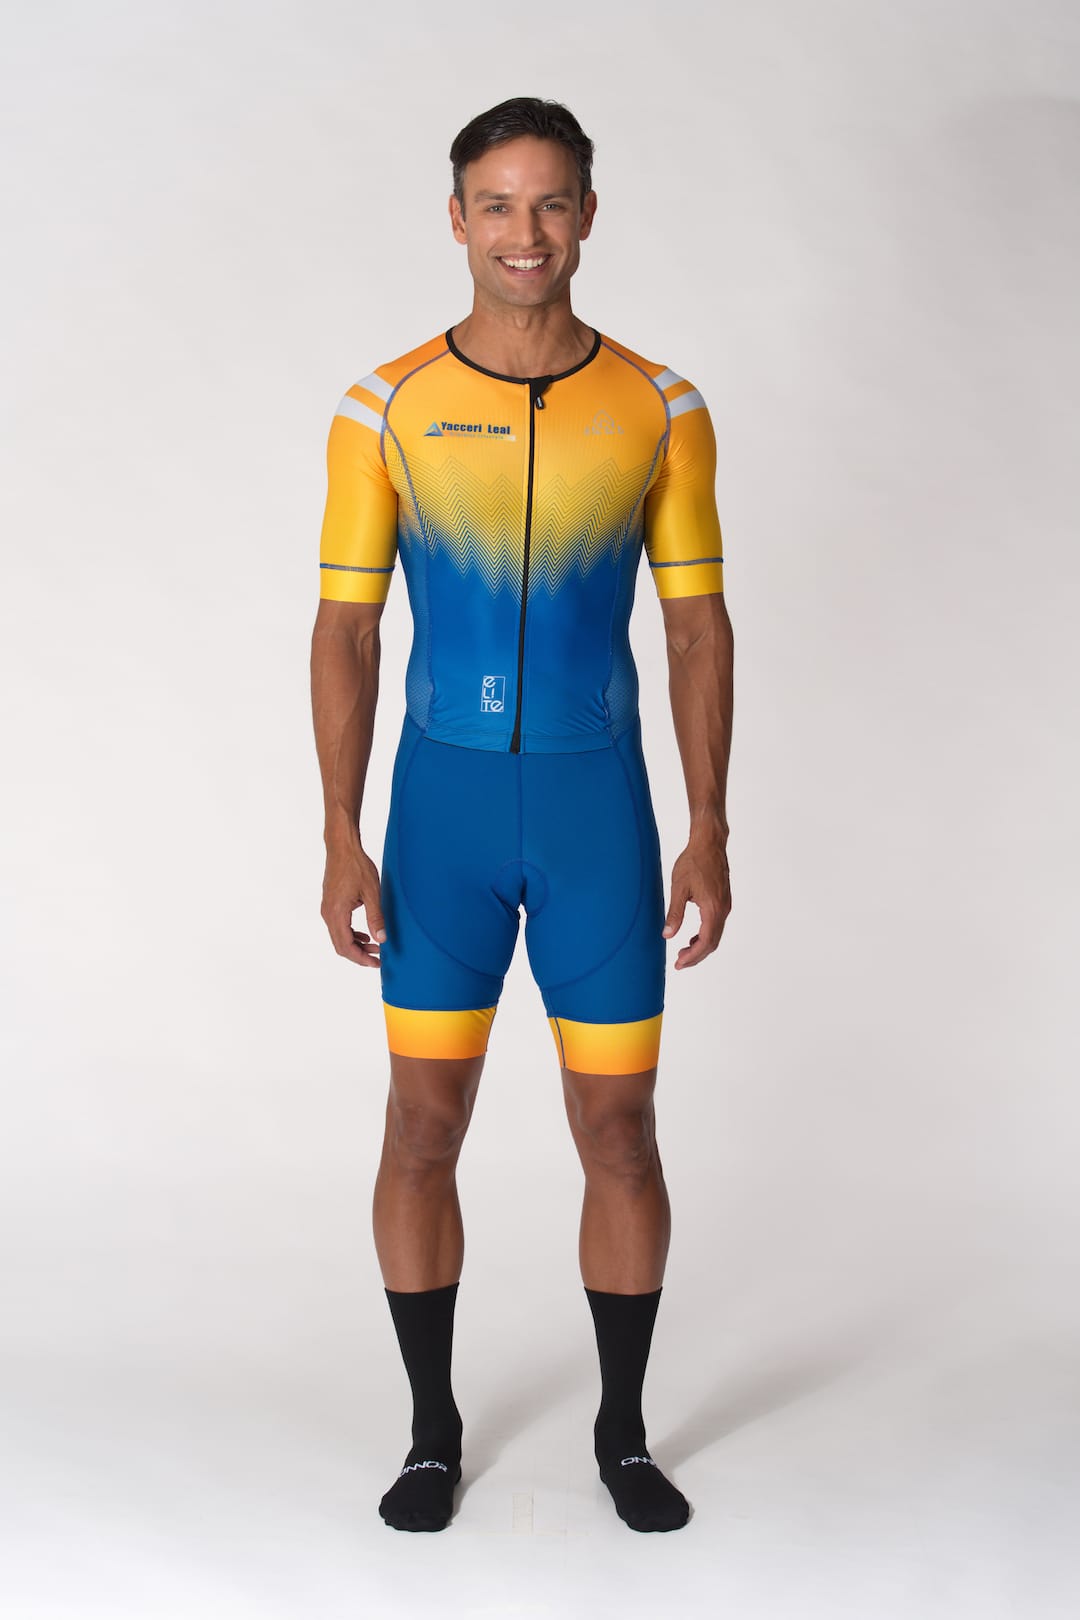 custom cycling jerseys miami no minimum order